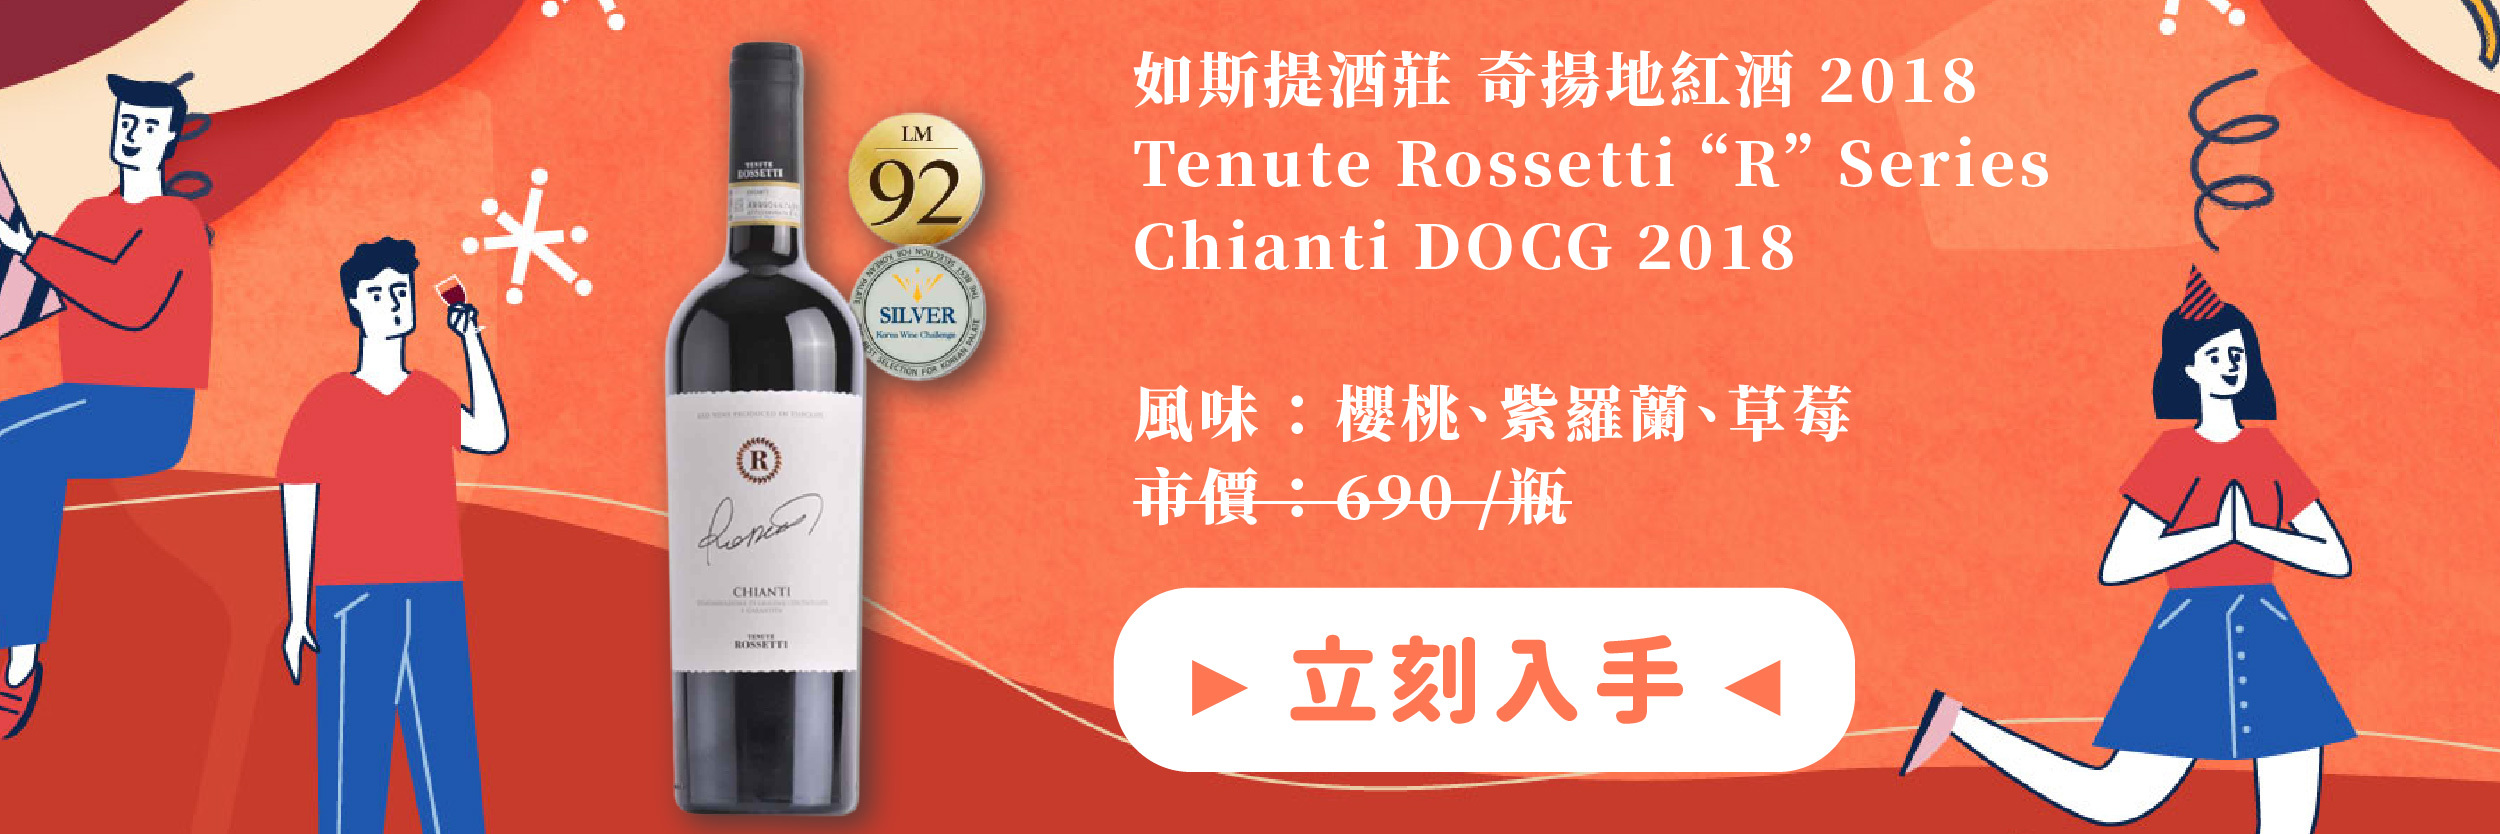 Tenute Rossetti “R” Series Chianti DOCG 2018